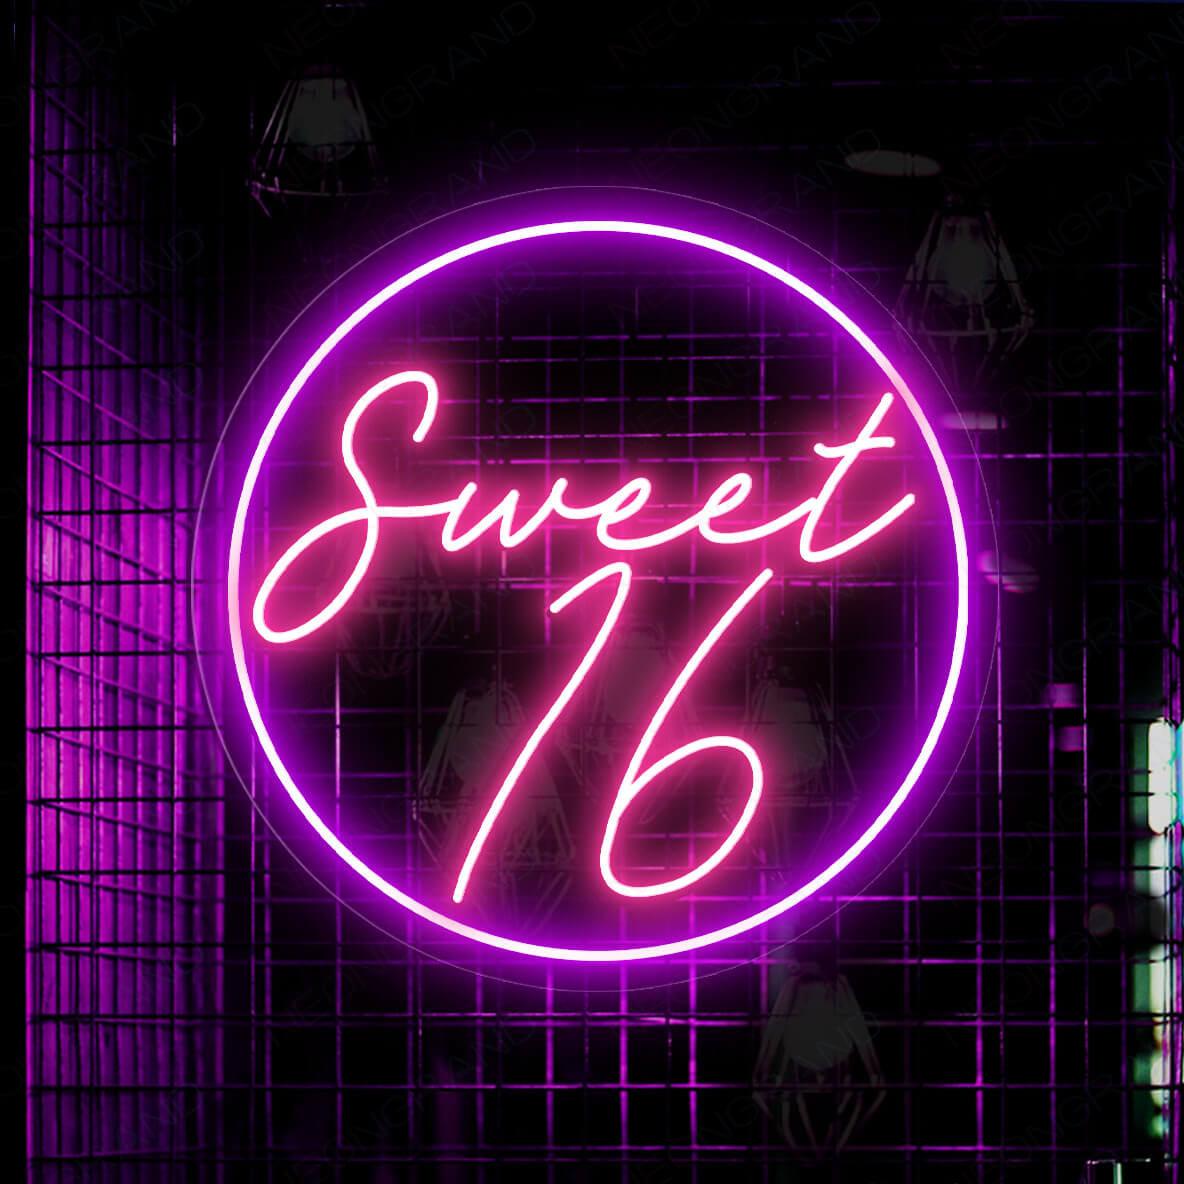 Sweet 16 Neon Sign Happy Birthday Neon Sign Led Light purple